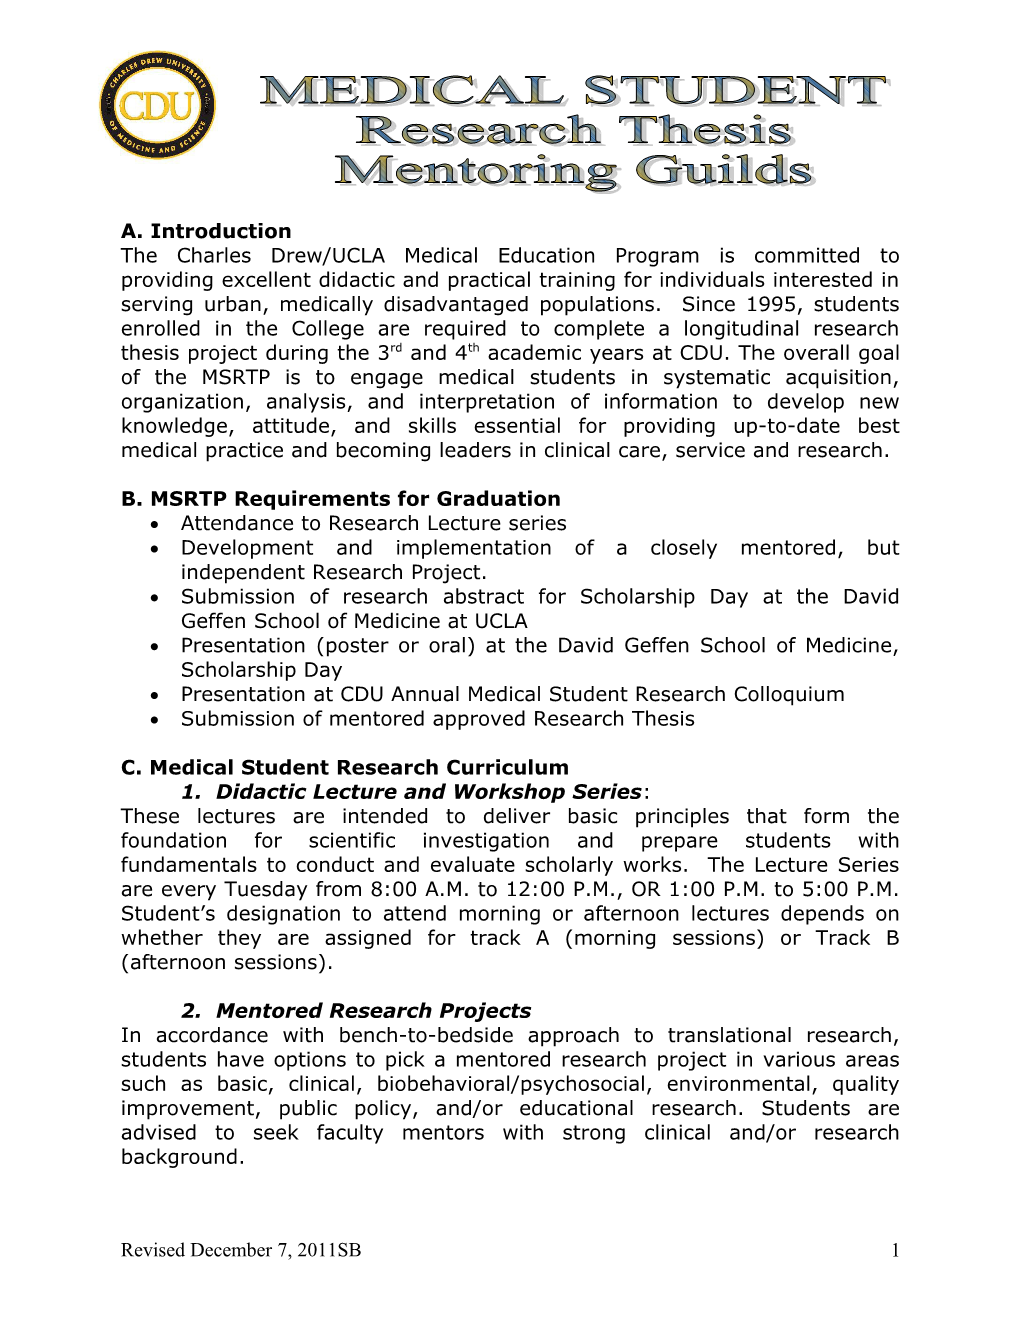 B. MSRTP Requirements for Graduation